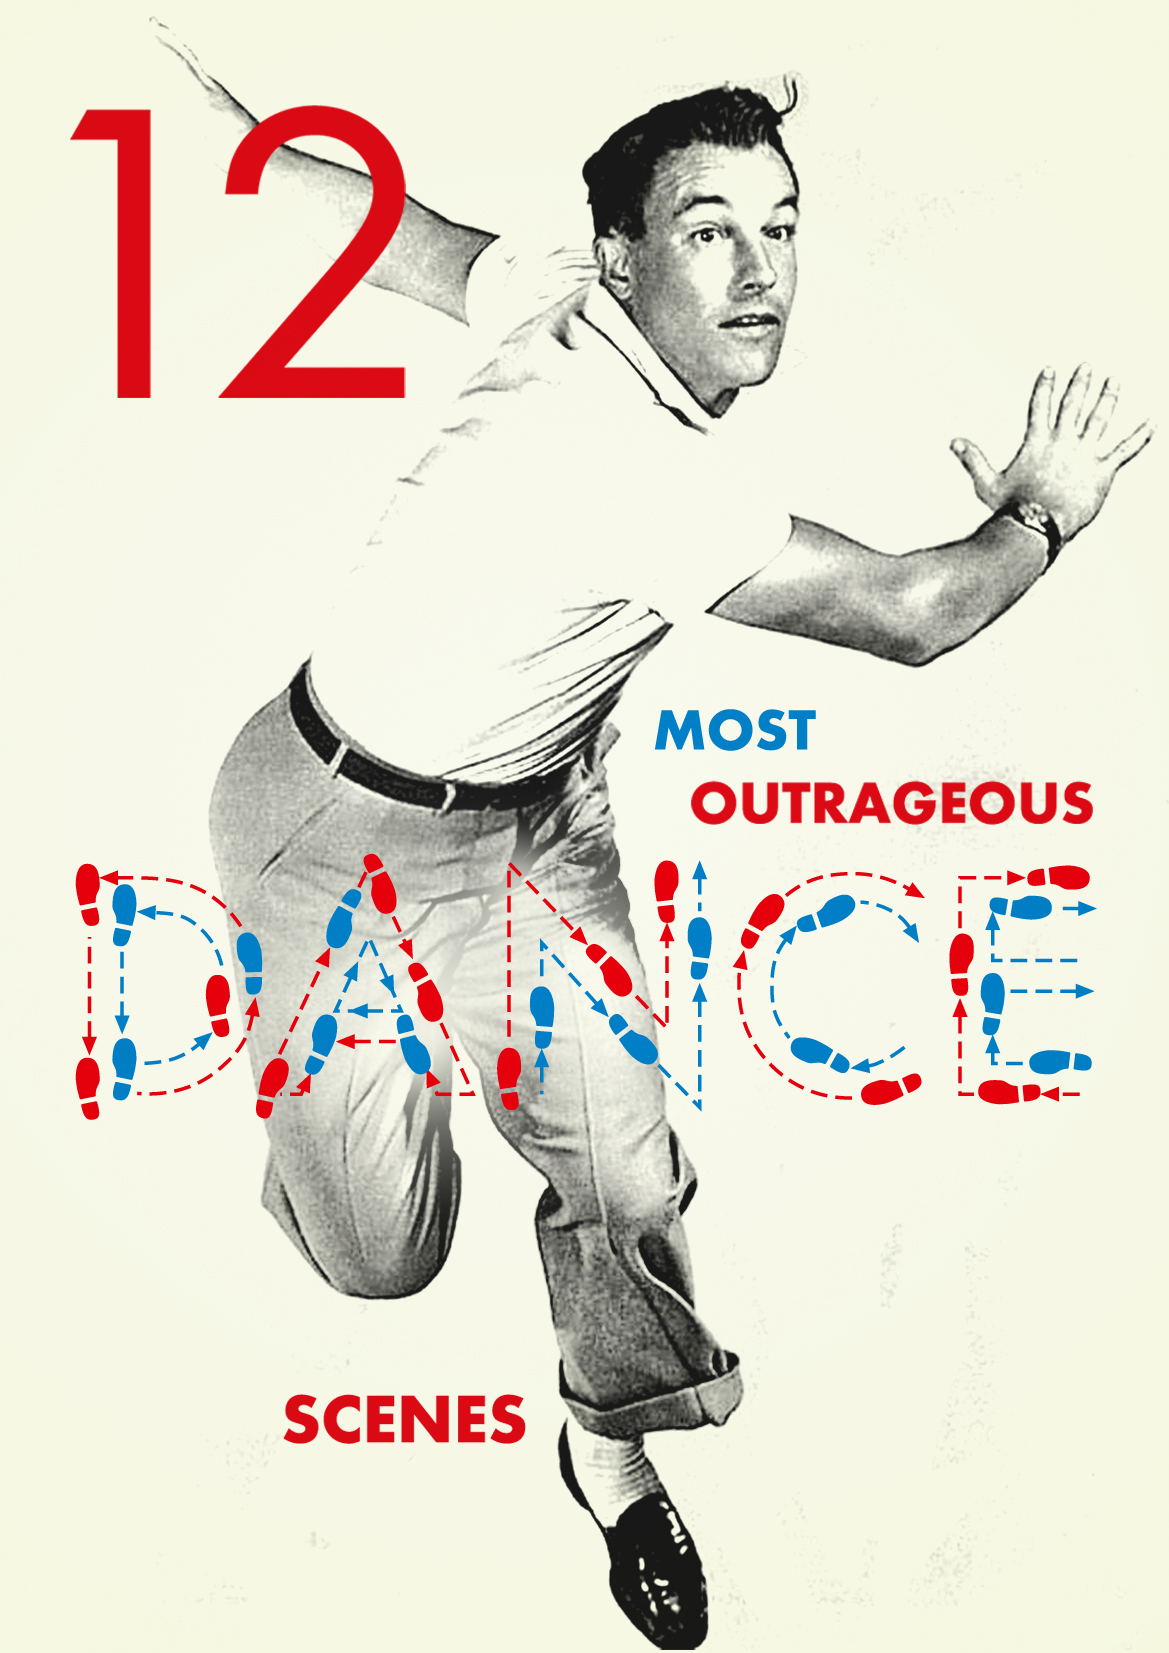 12 Most Outrageous Dance Scenes